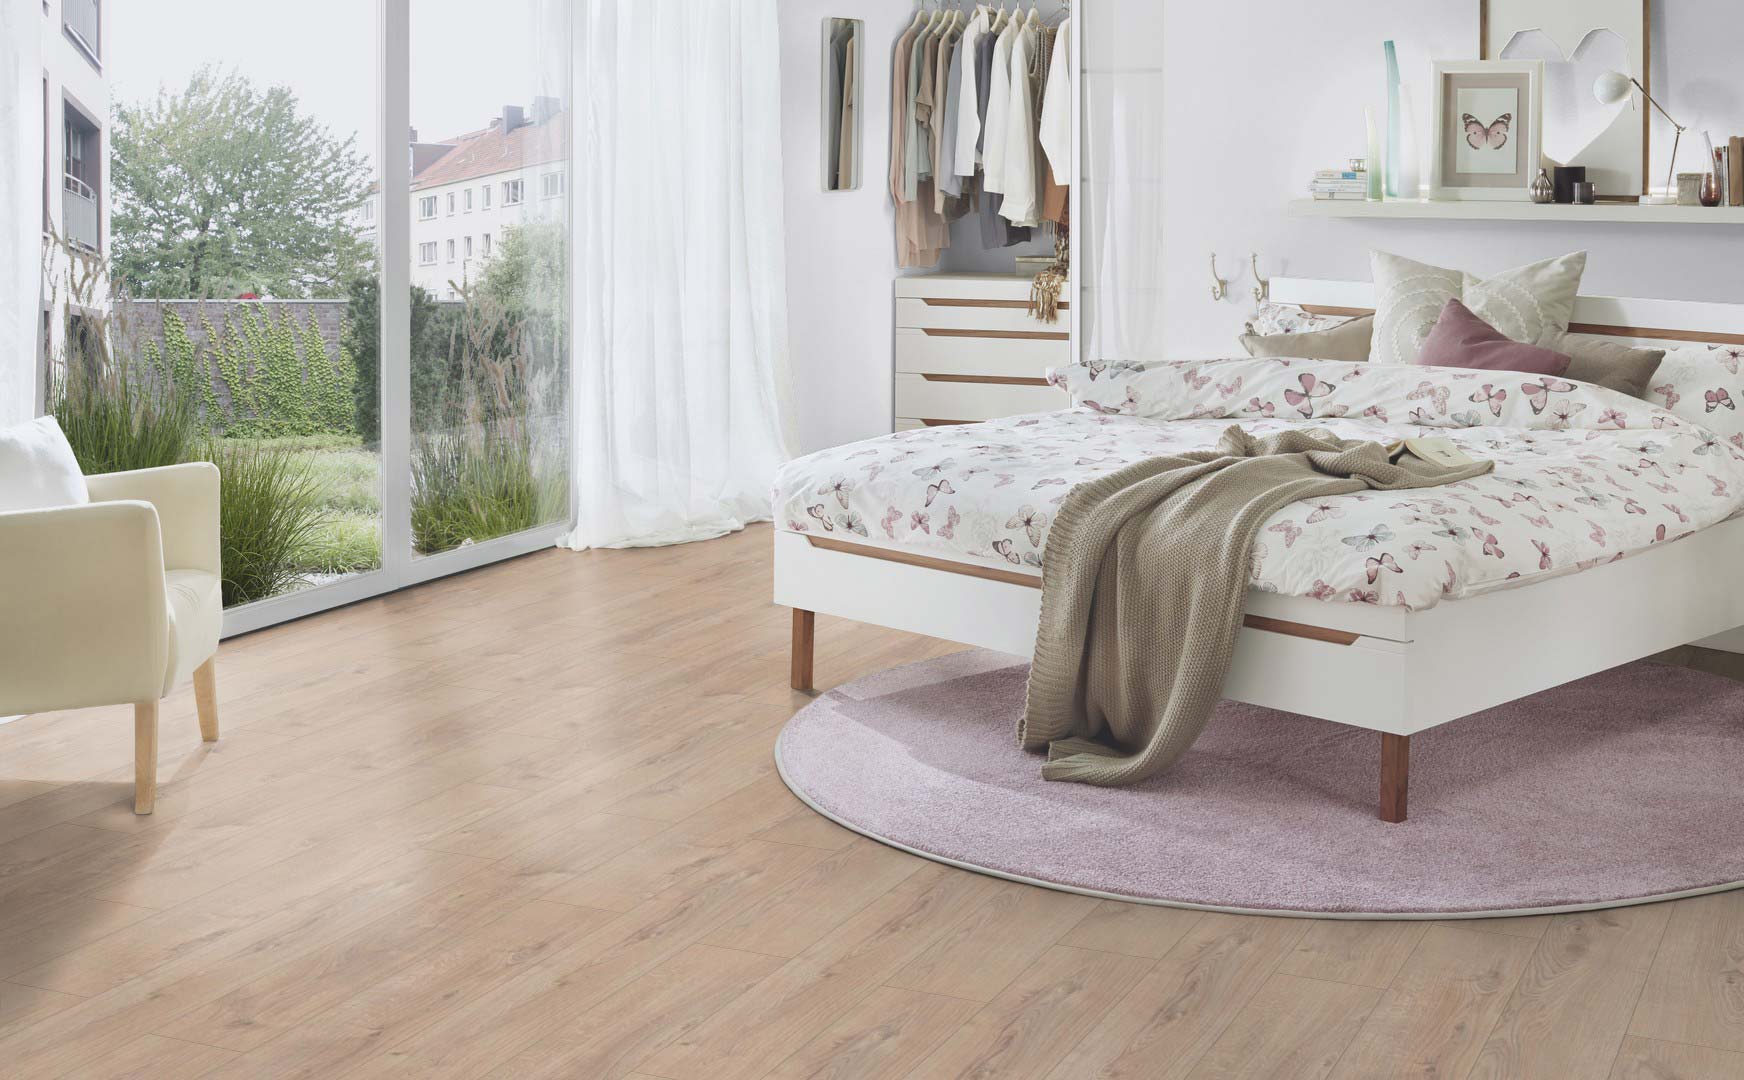 EUROSTYLE & EUROTREND Bedroom Laminate Flooring